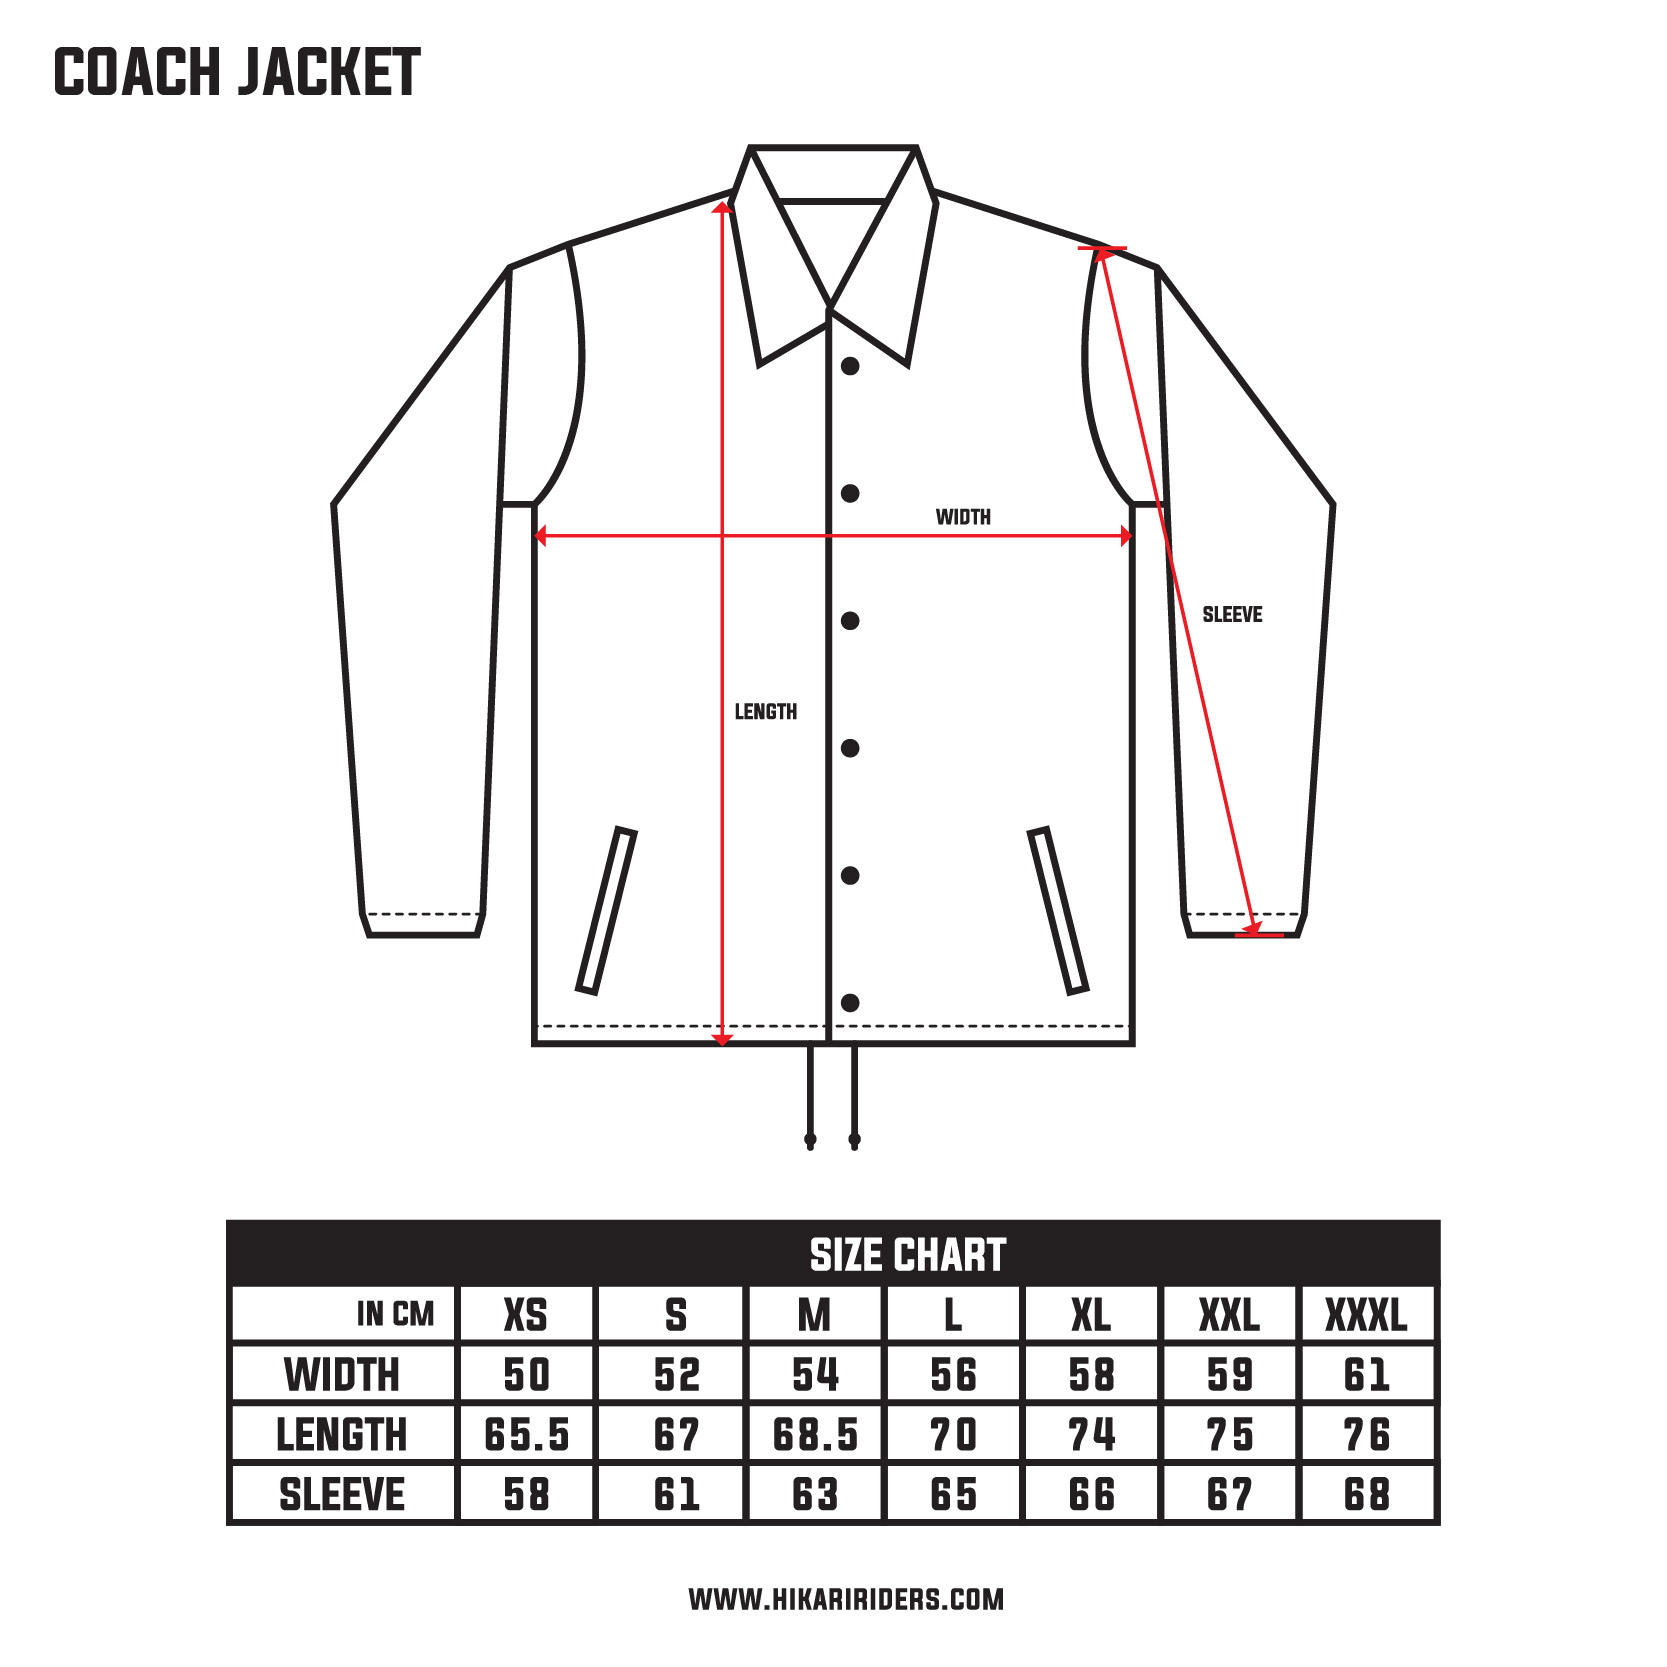 Size Chart (Coach Jacket)